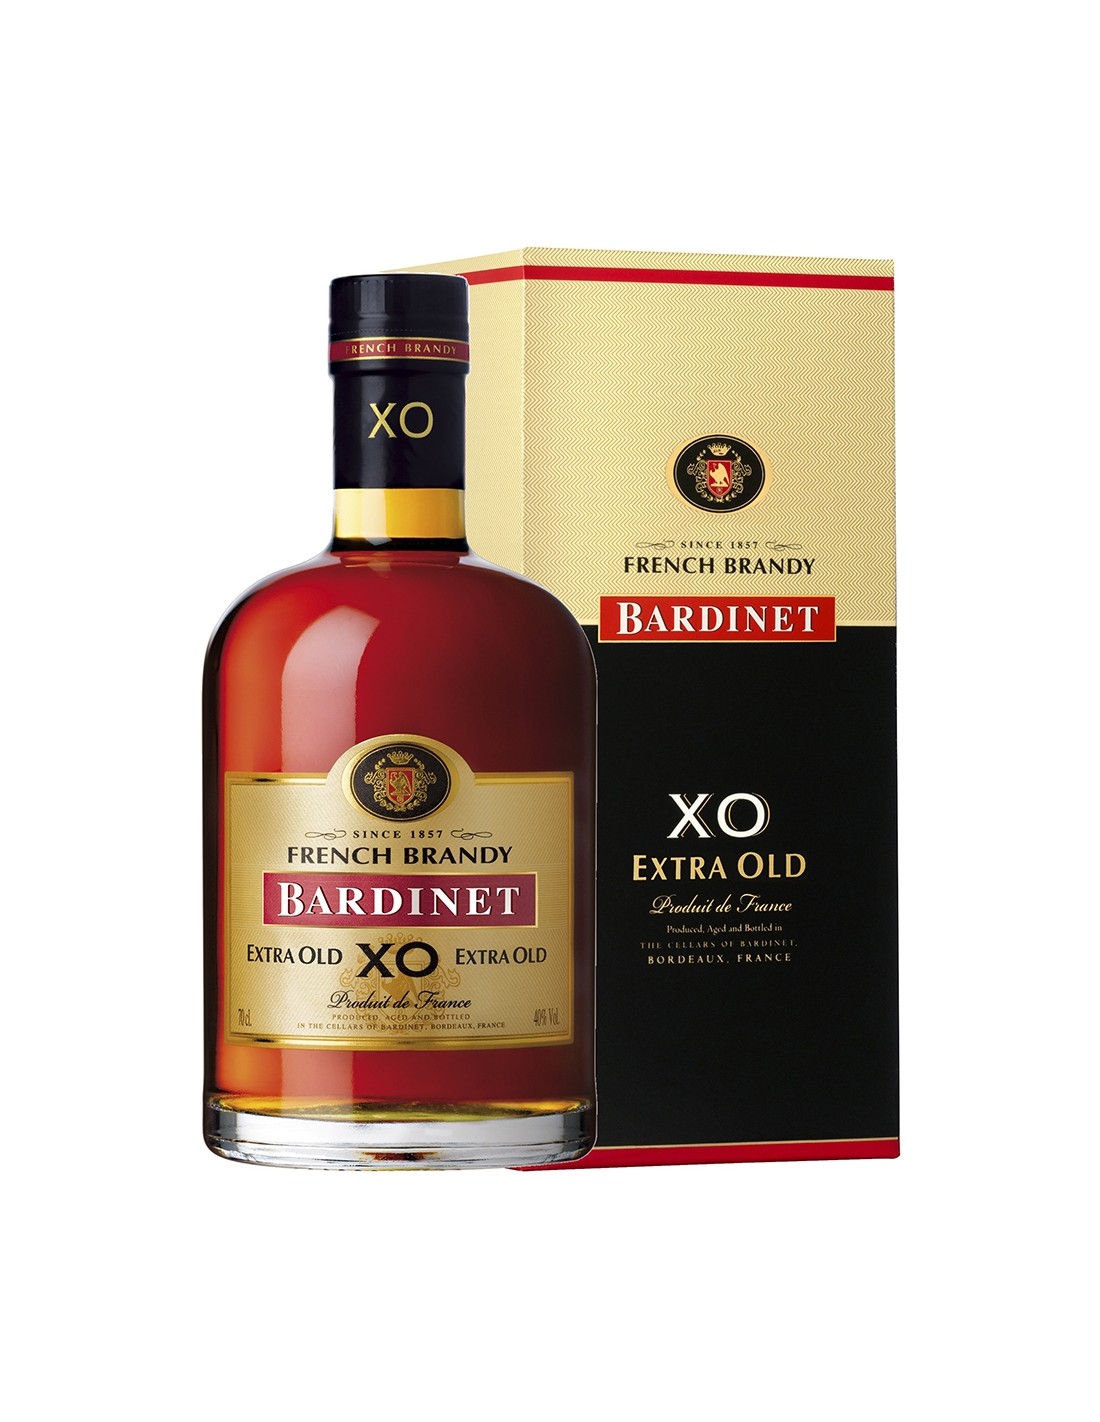 Brandy Bardinet XO 40% alc., 0.7L, Franta alcooldiscount.ro